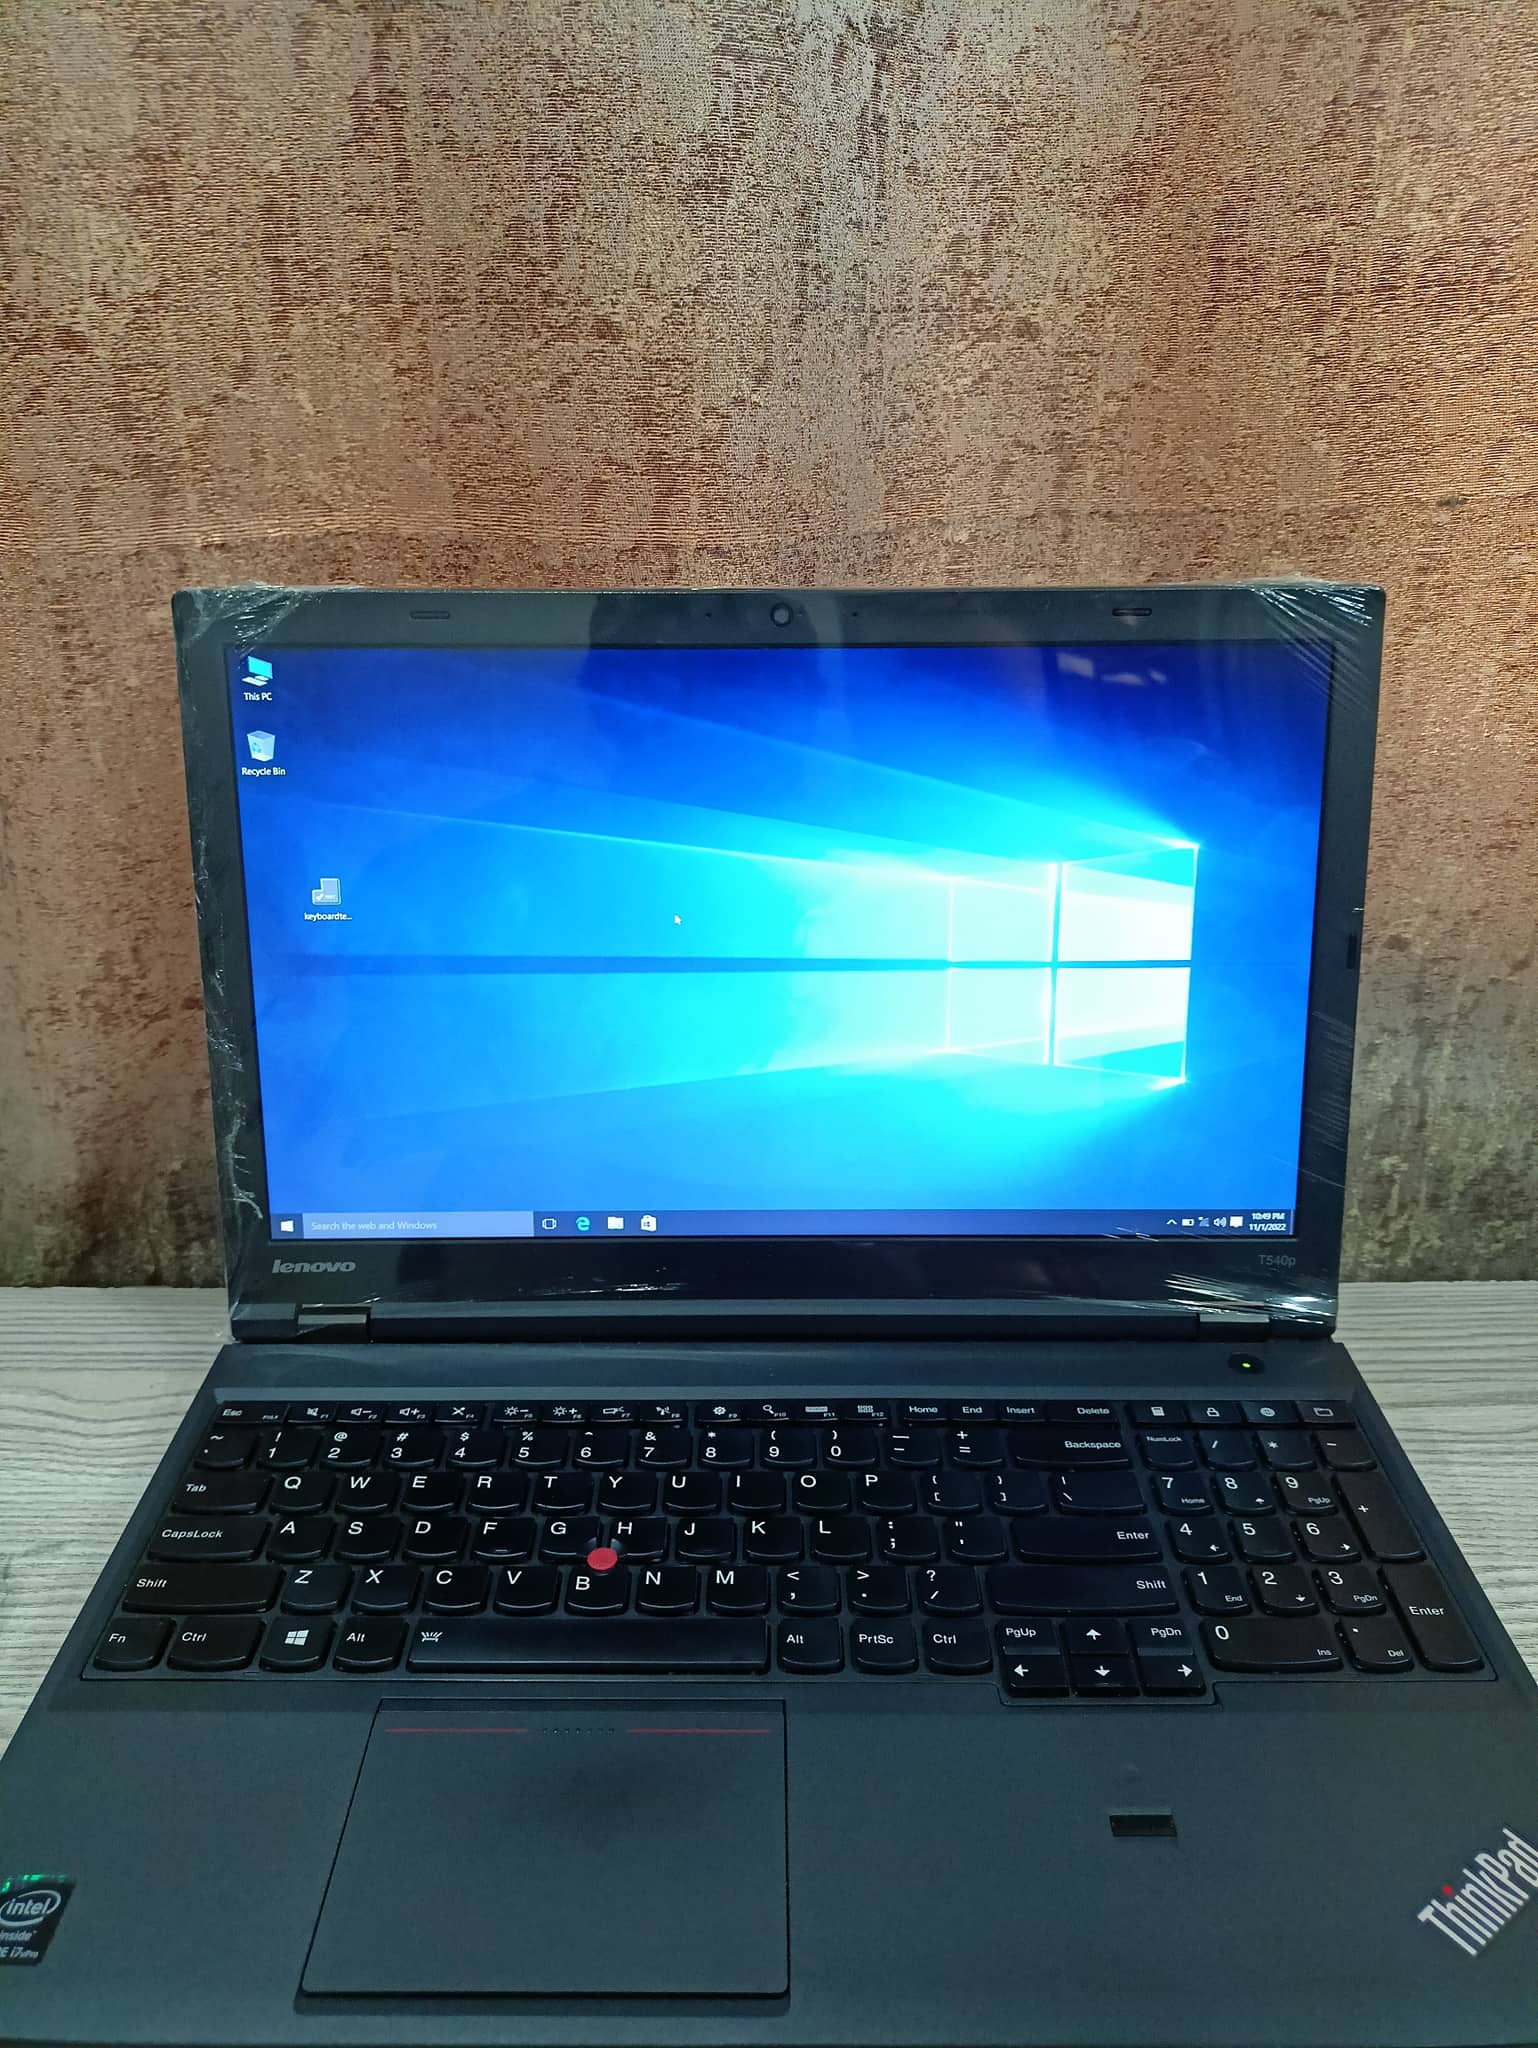 Lenovo Thinkpad T540P i7 4th Generation Big Screen Numpaid Backlight Keyboard Fast Awesome Laptop